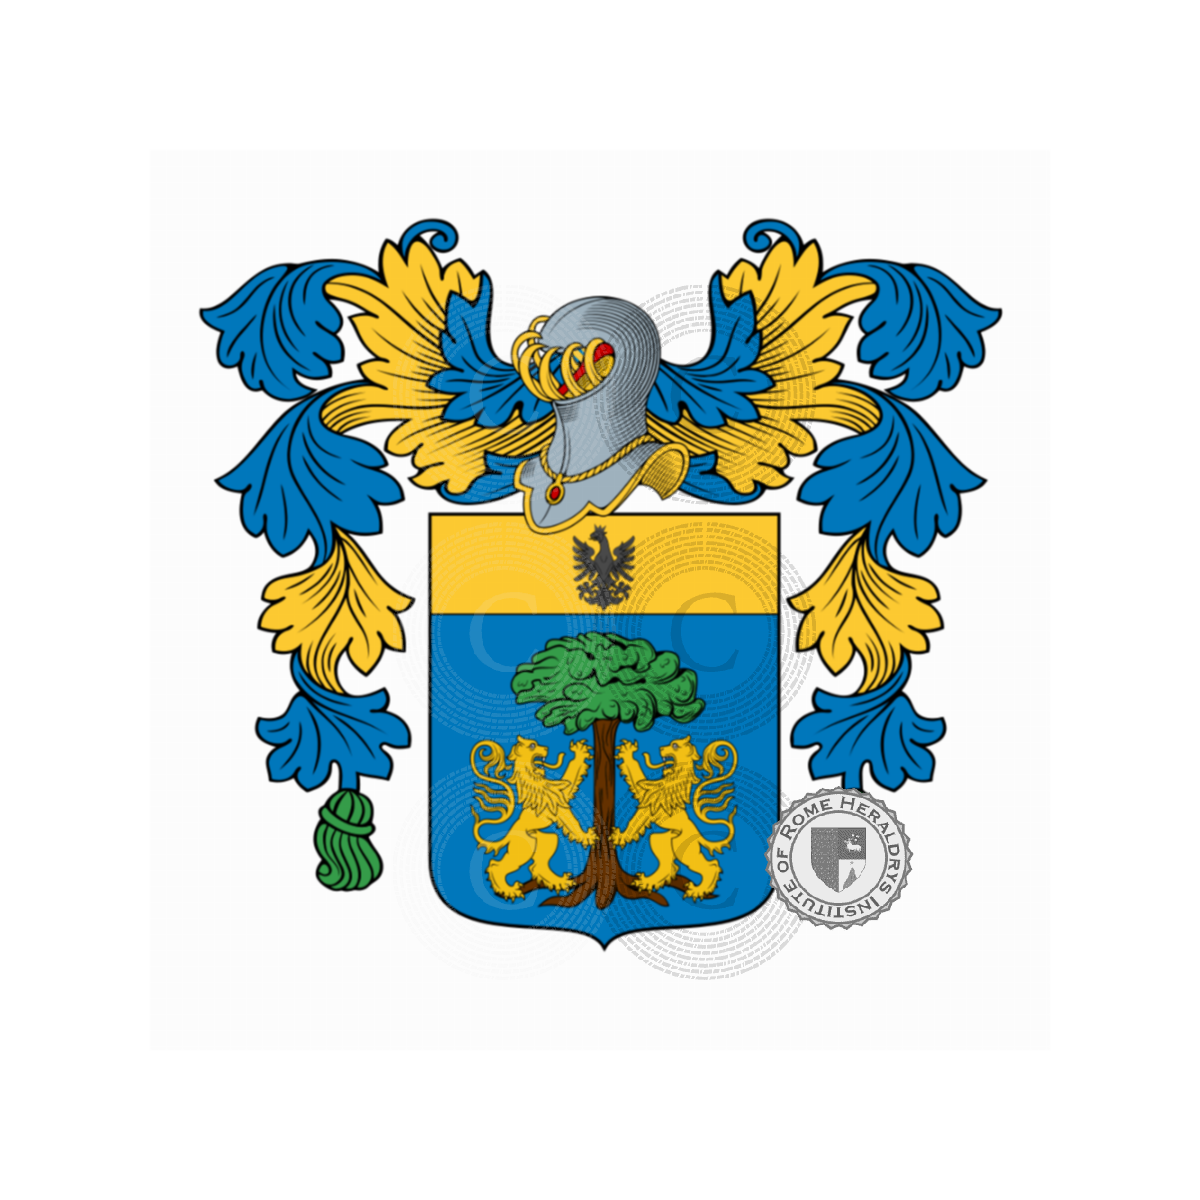 Coat of arms of familyBarba